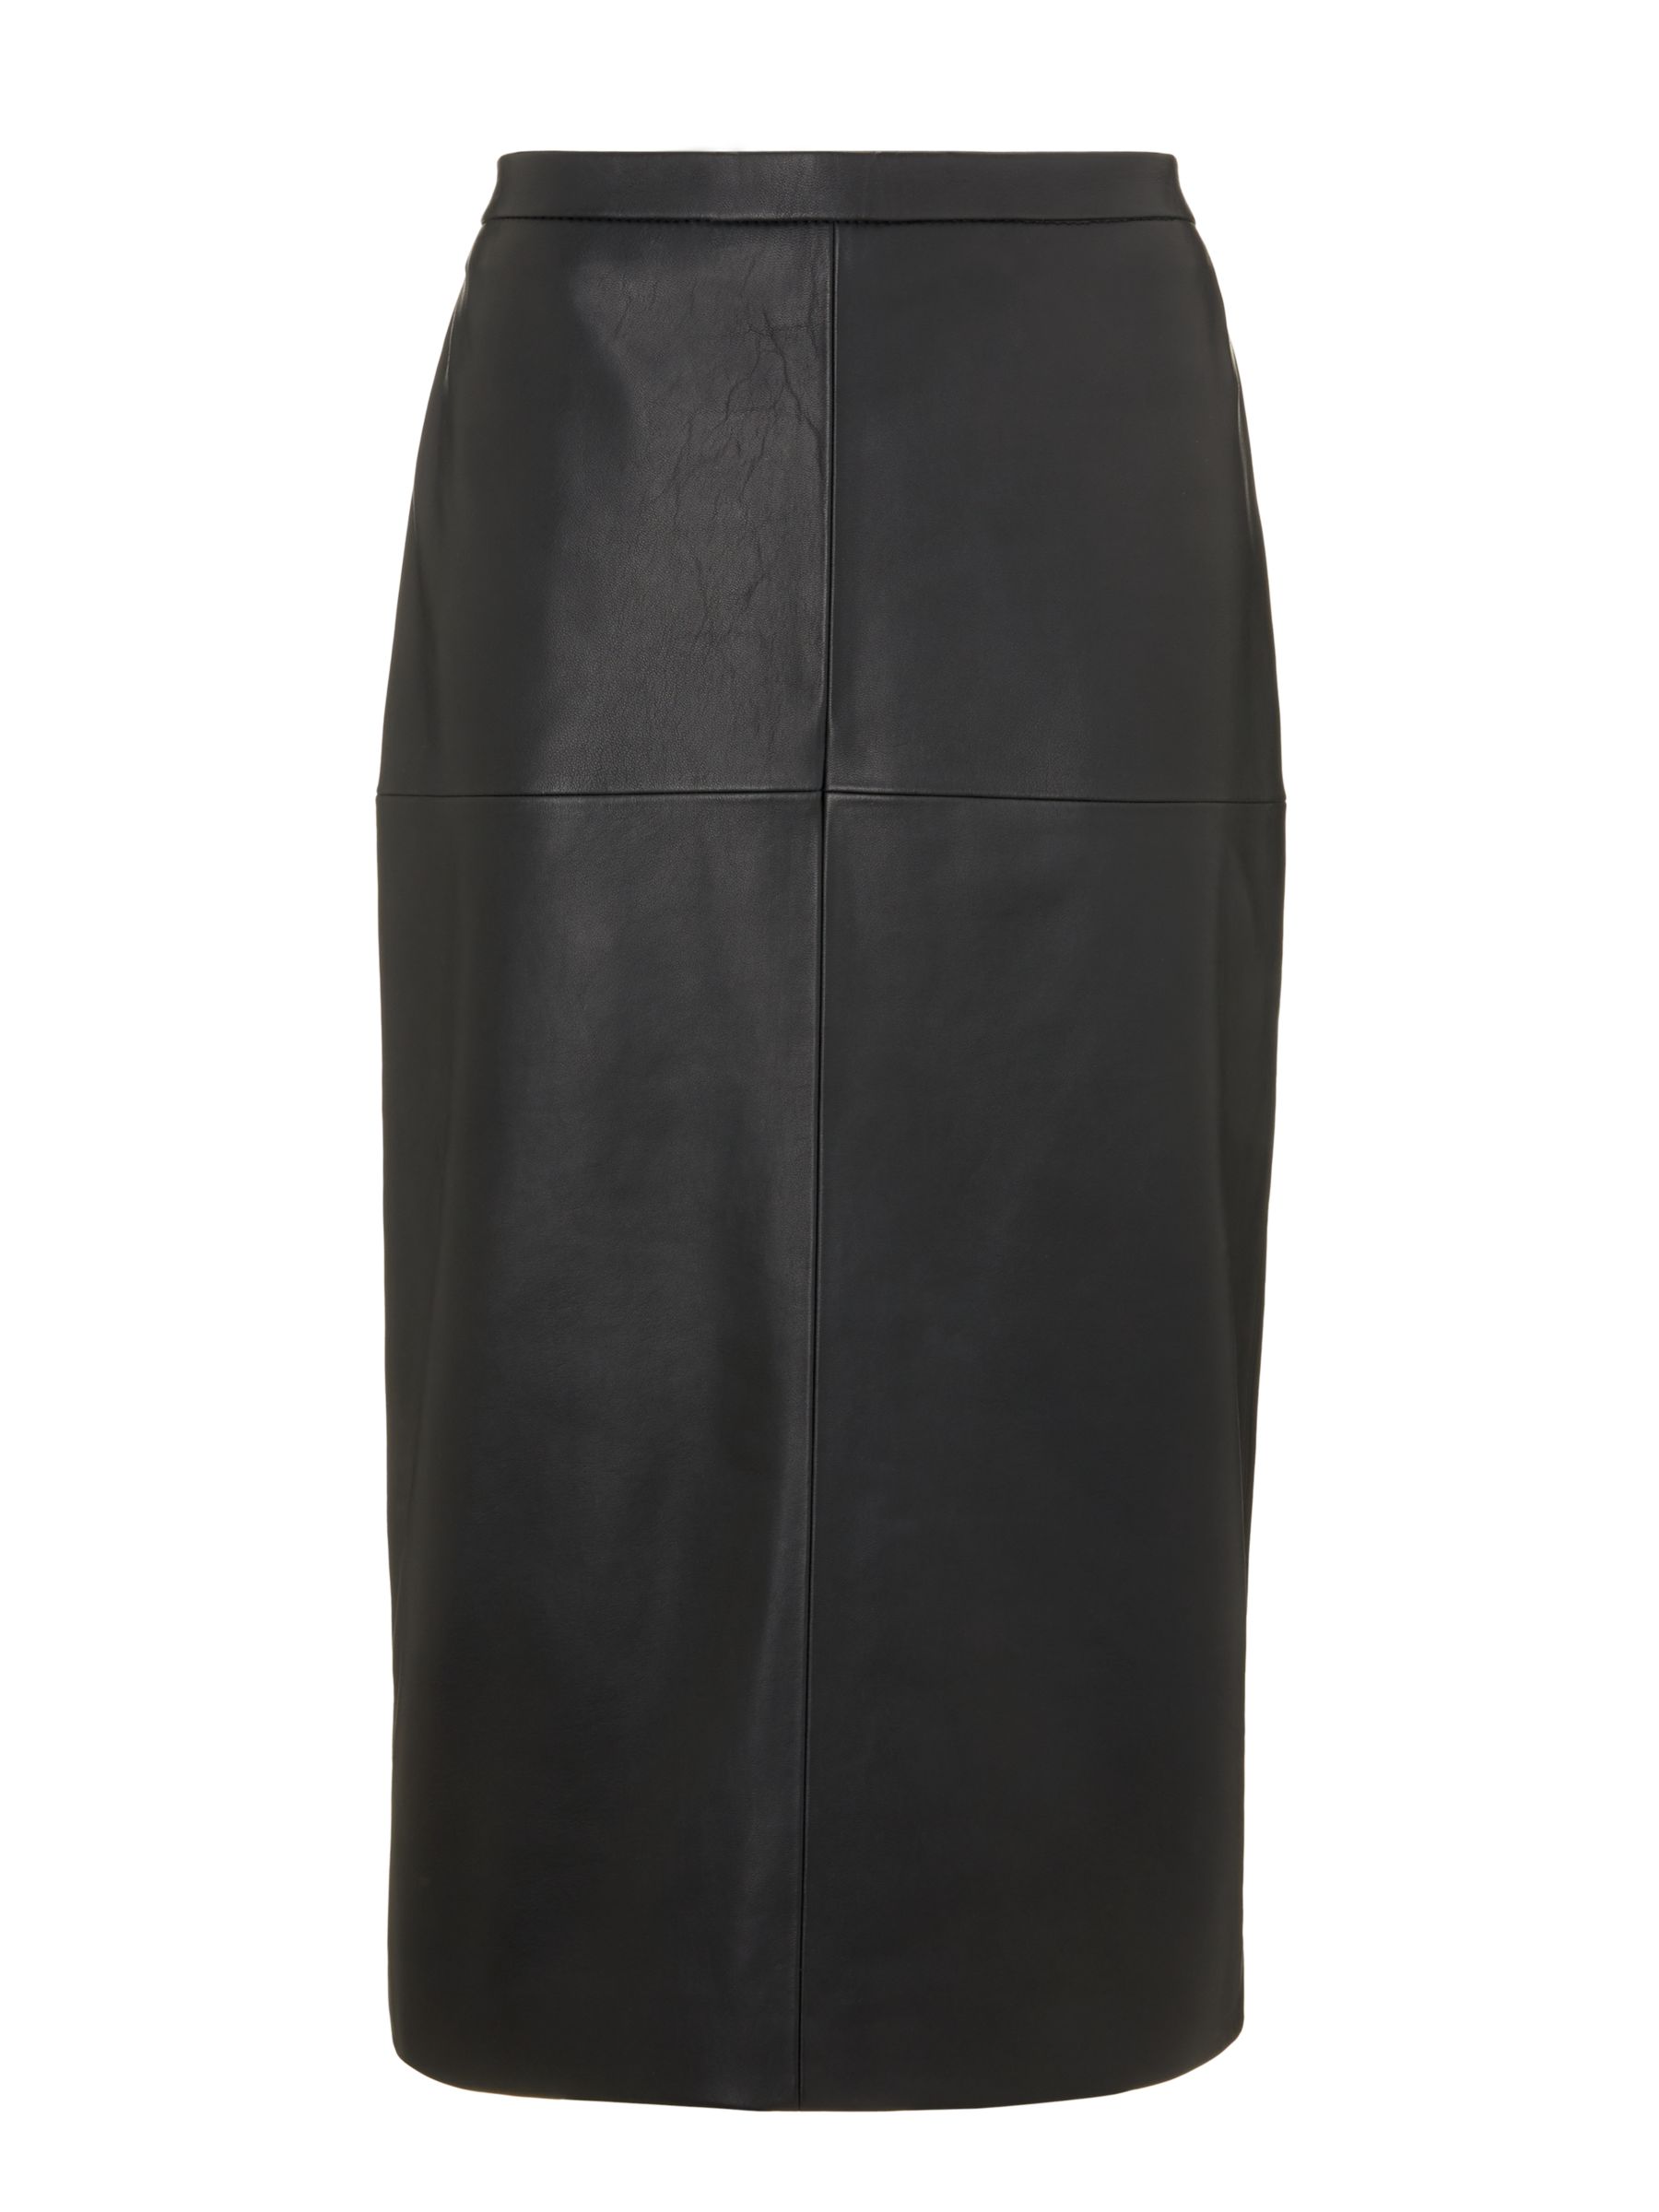 John Lewis & Partners Leather Pencil Skirt